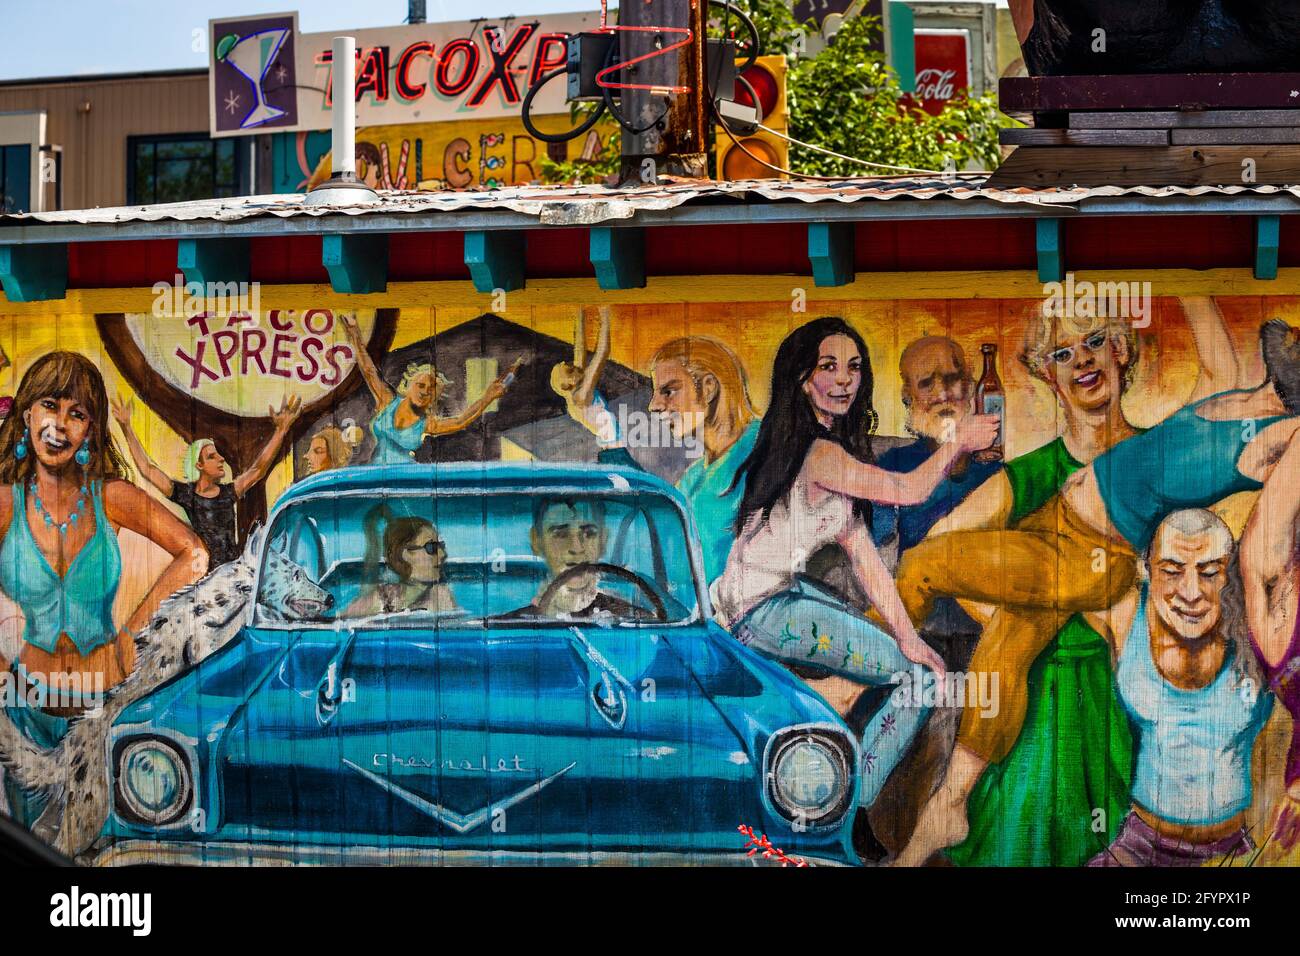 El icónico Taco Express en Austin, Texas Foto de stock